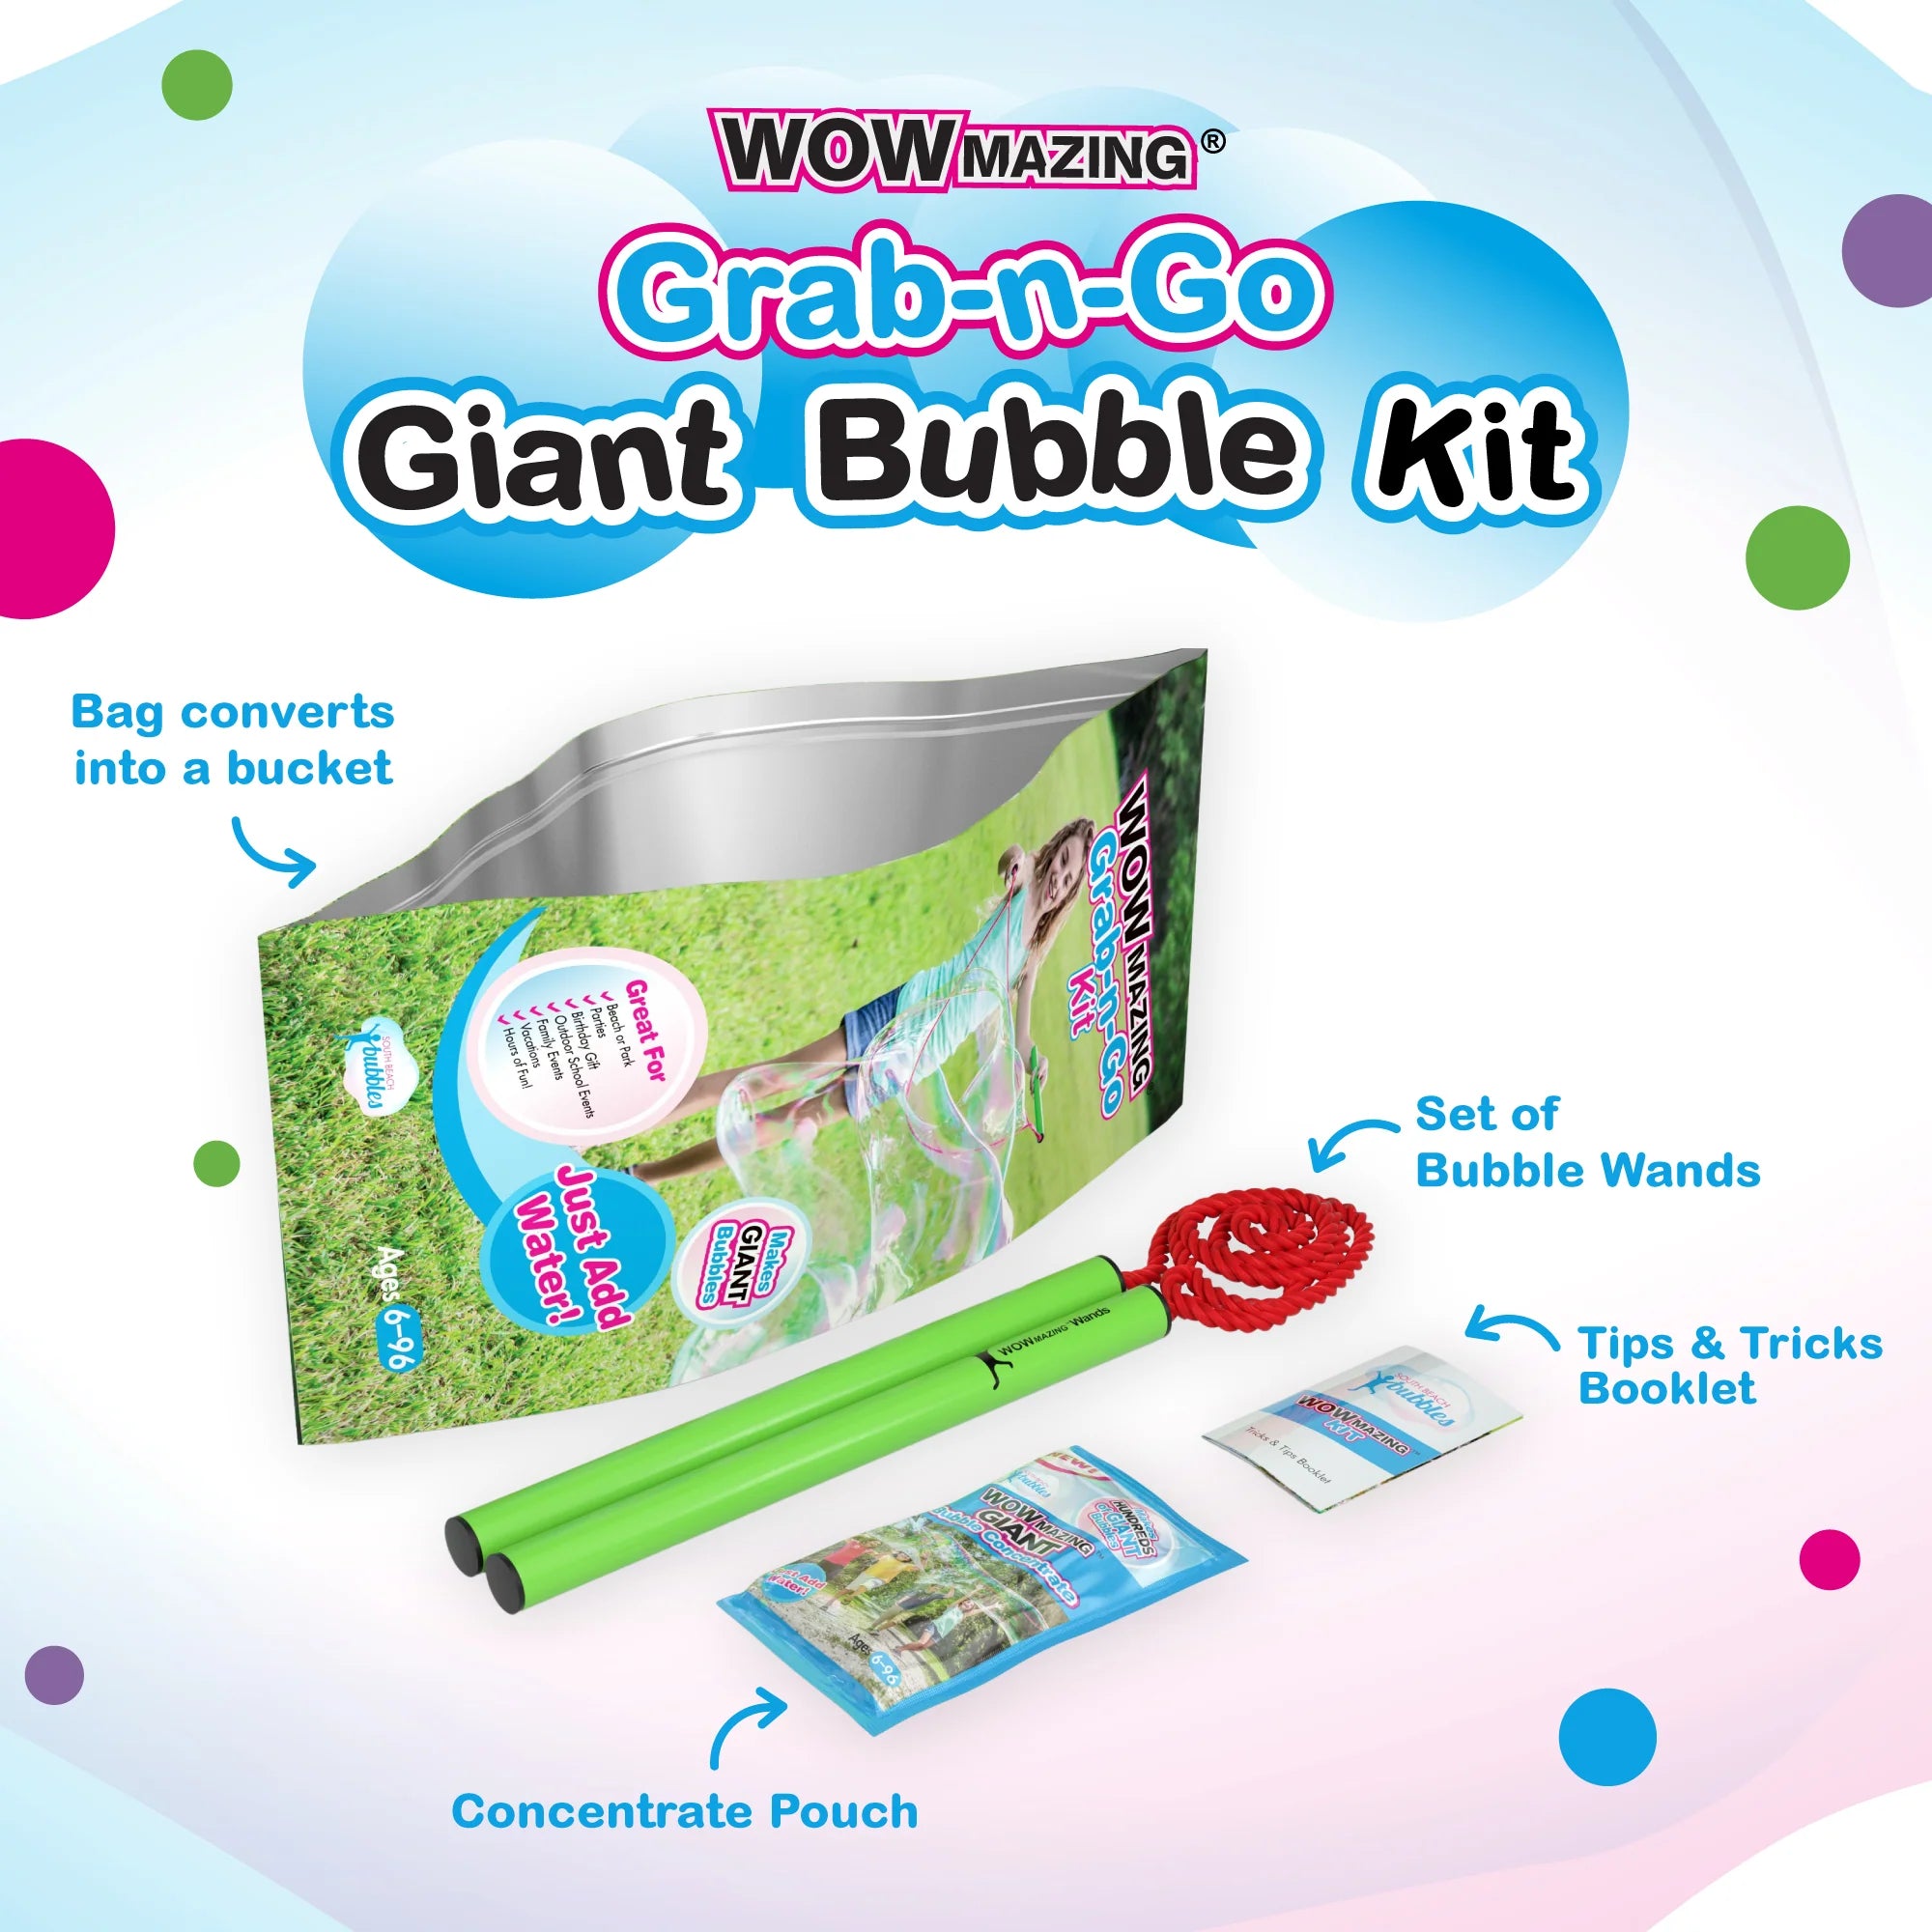 WOWmazing Grab n Go Bubble Kit